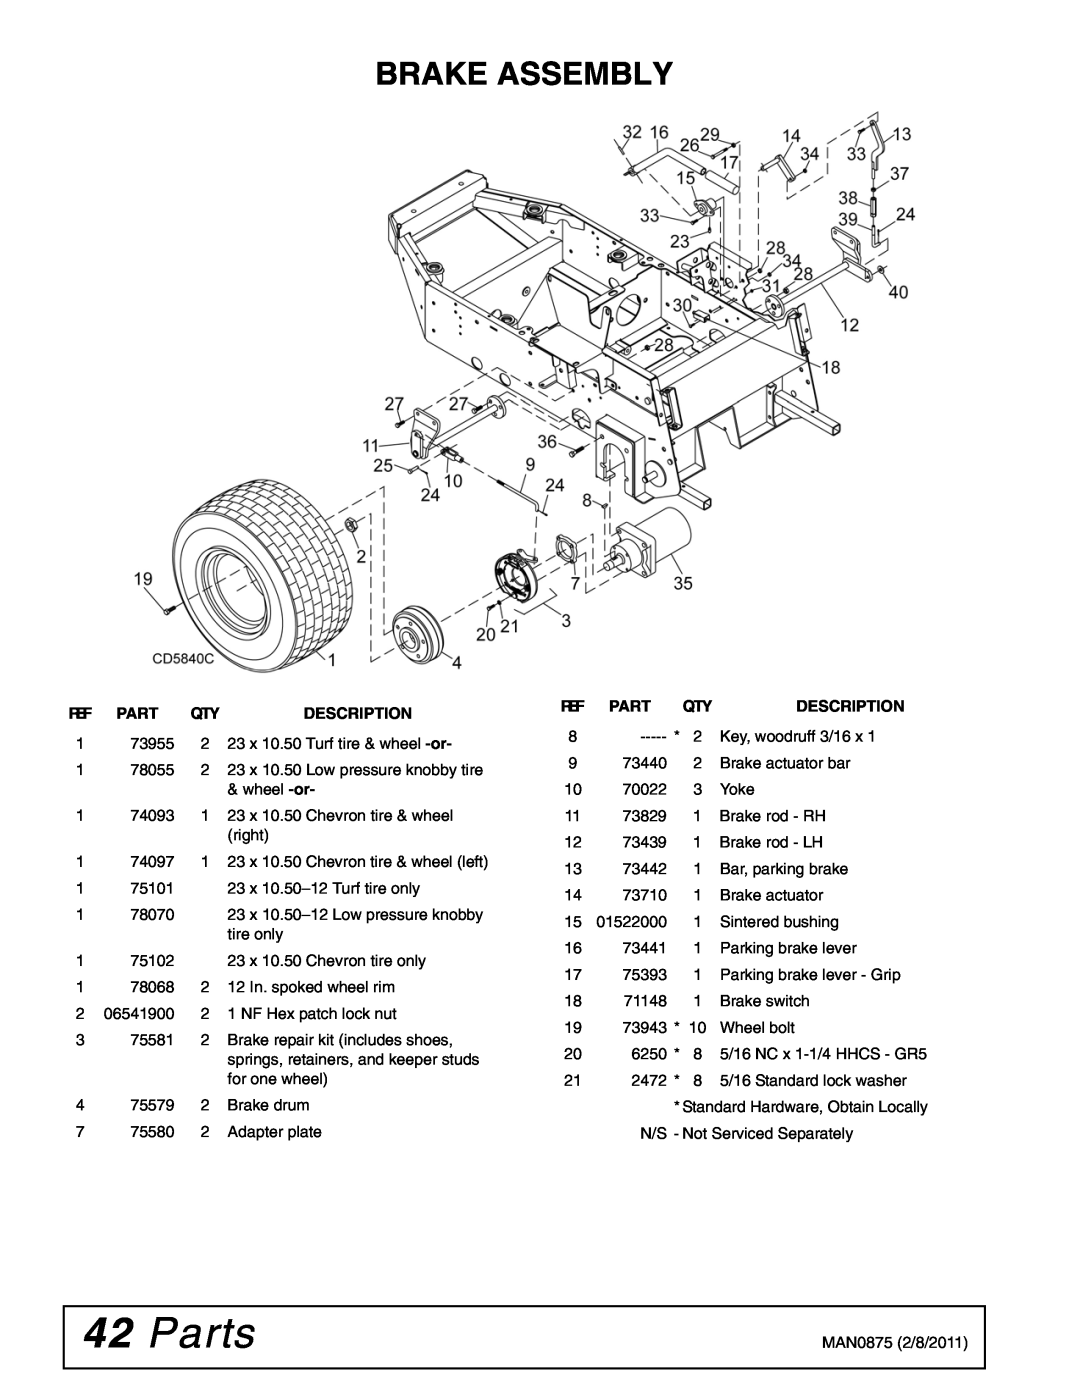 Woods Equipment FZ28K, FZ23B manual Parts, Brake Assembly 